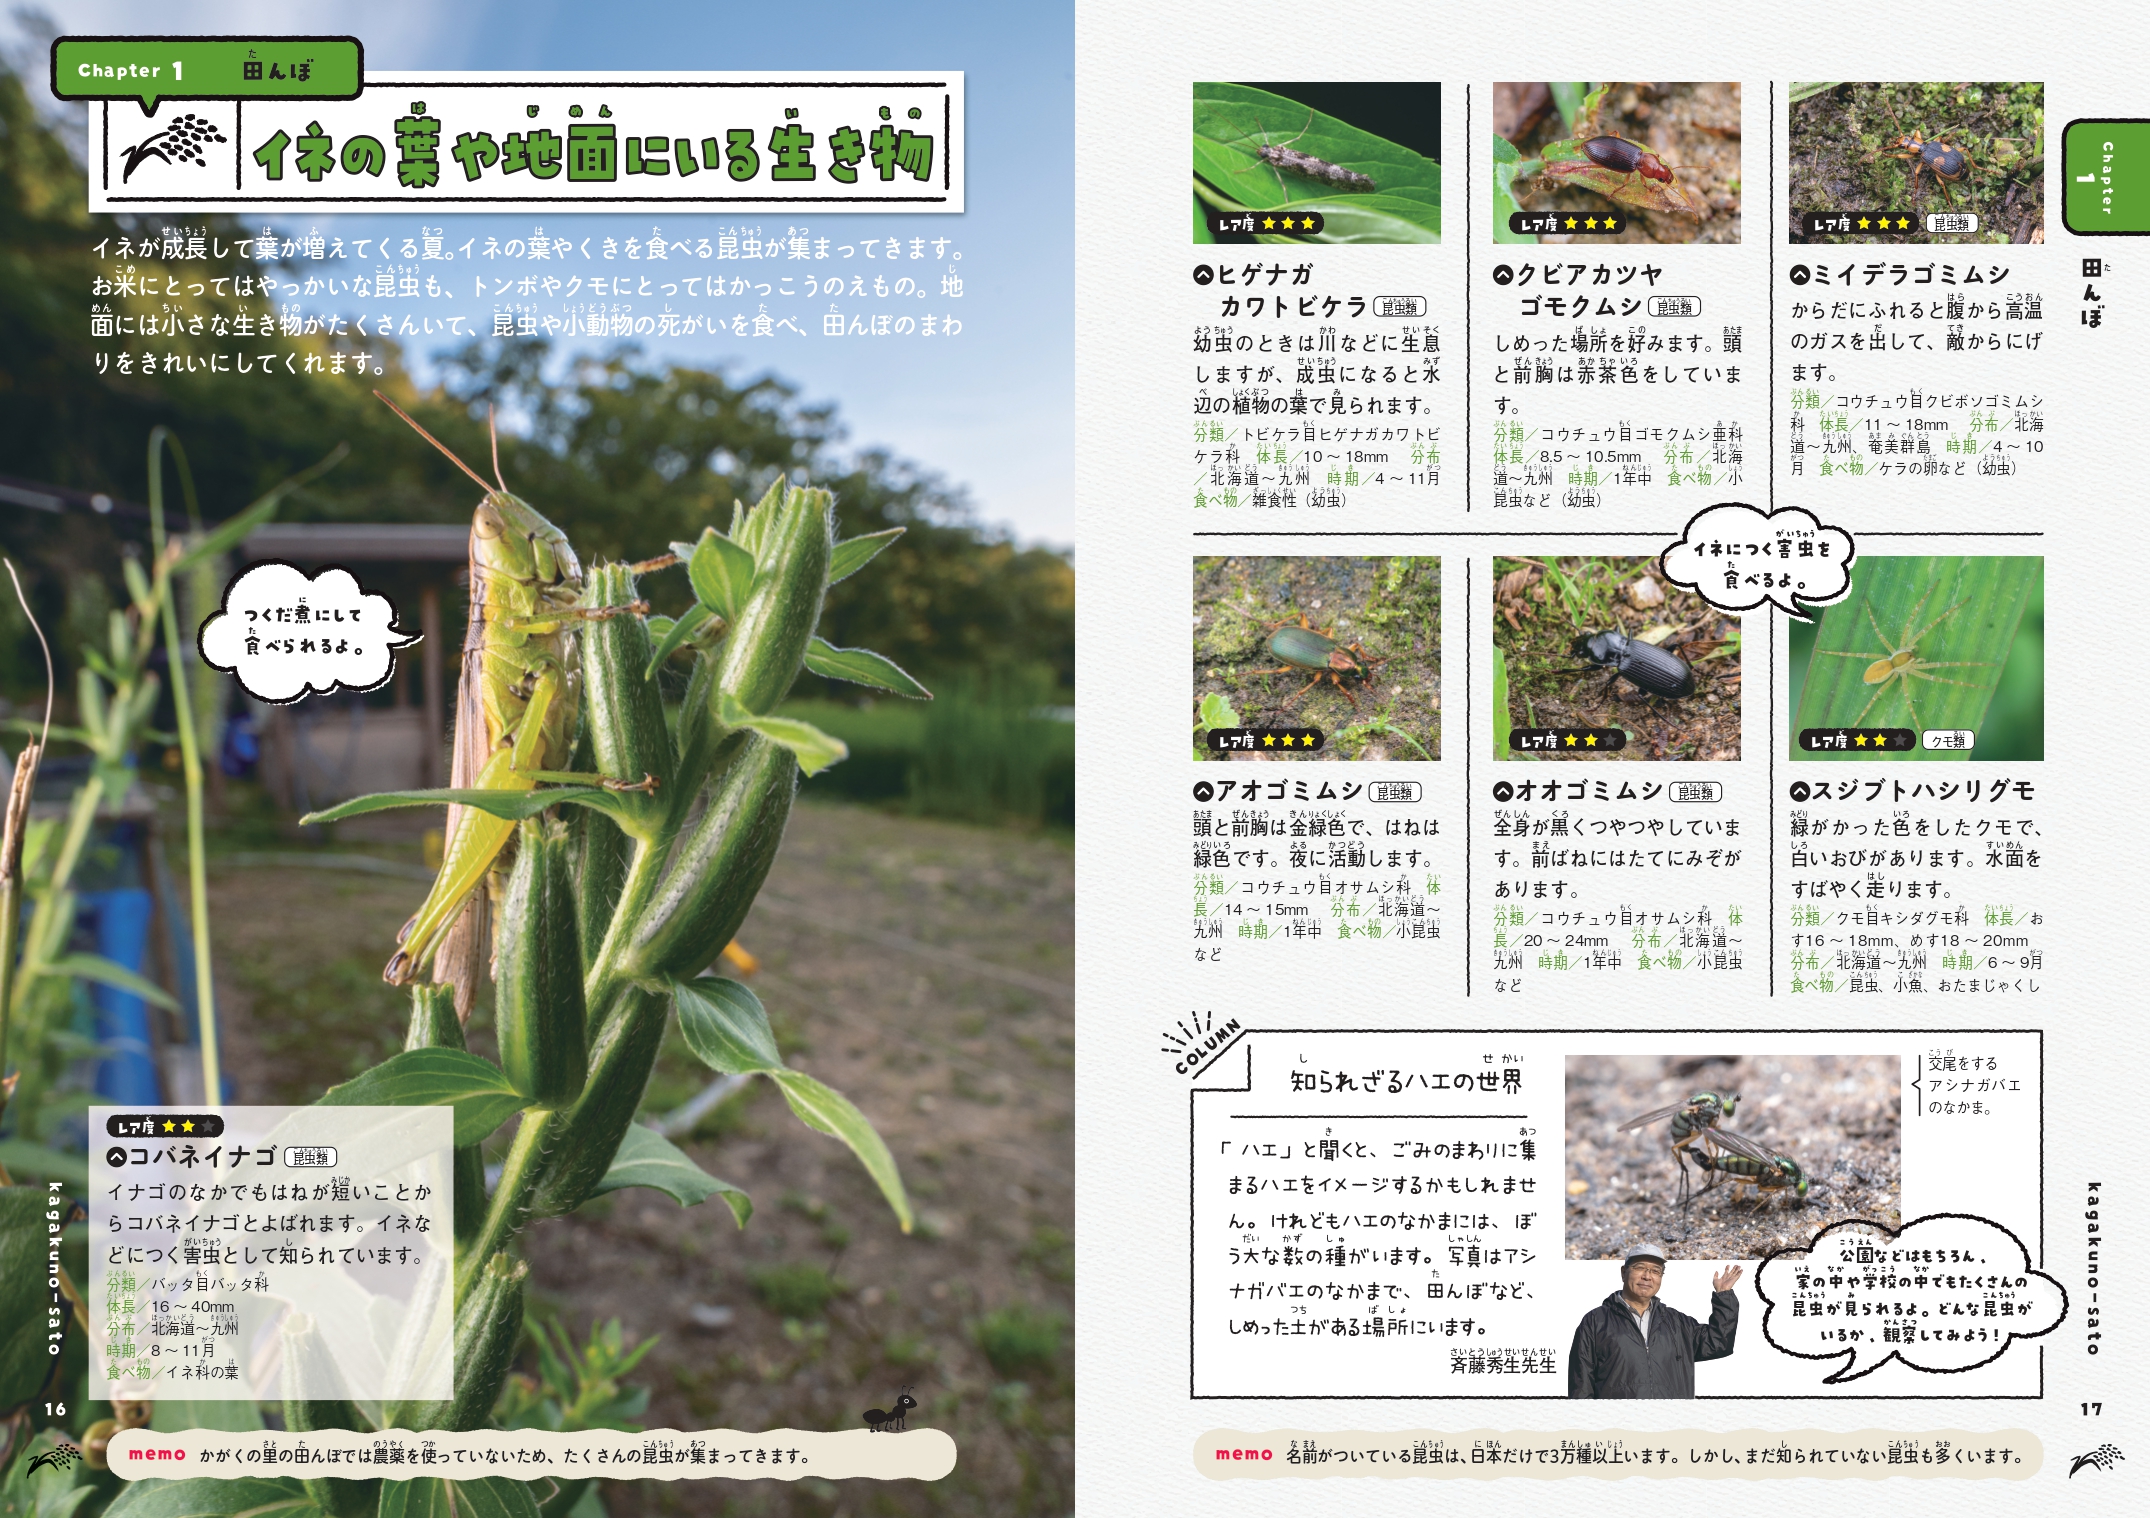 「TokyoBugBoysの法師人響さんが里で撮影した、とっておきの昆虫写真が満載」紙面